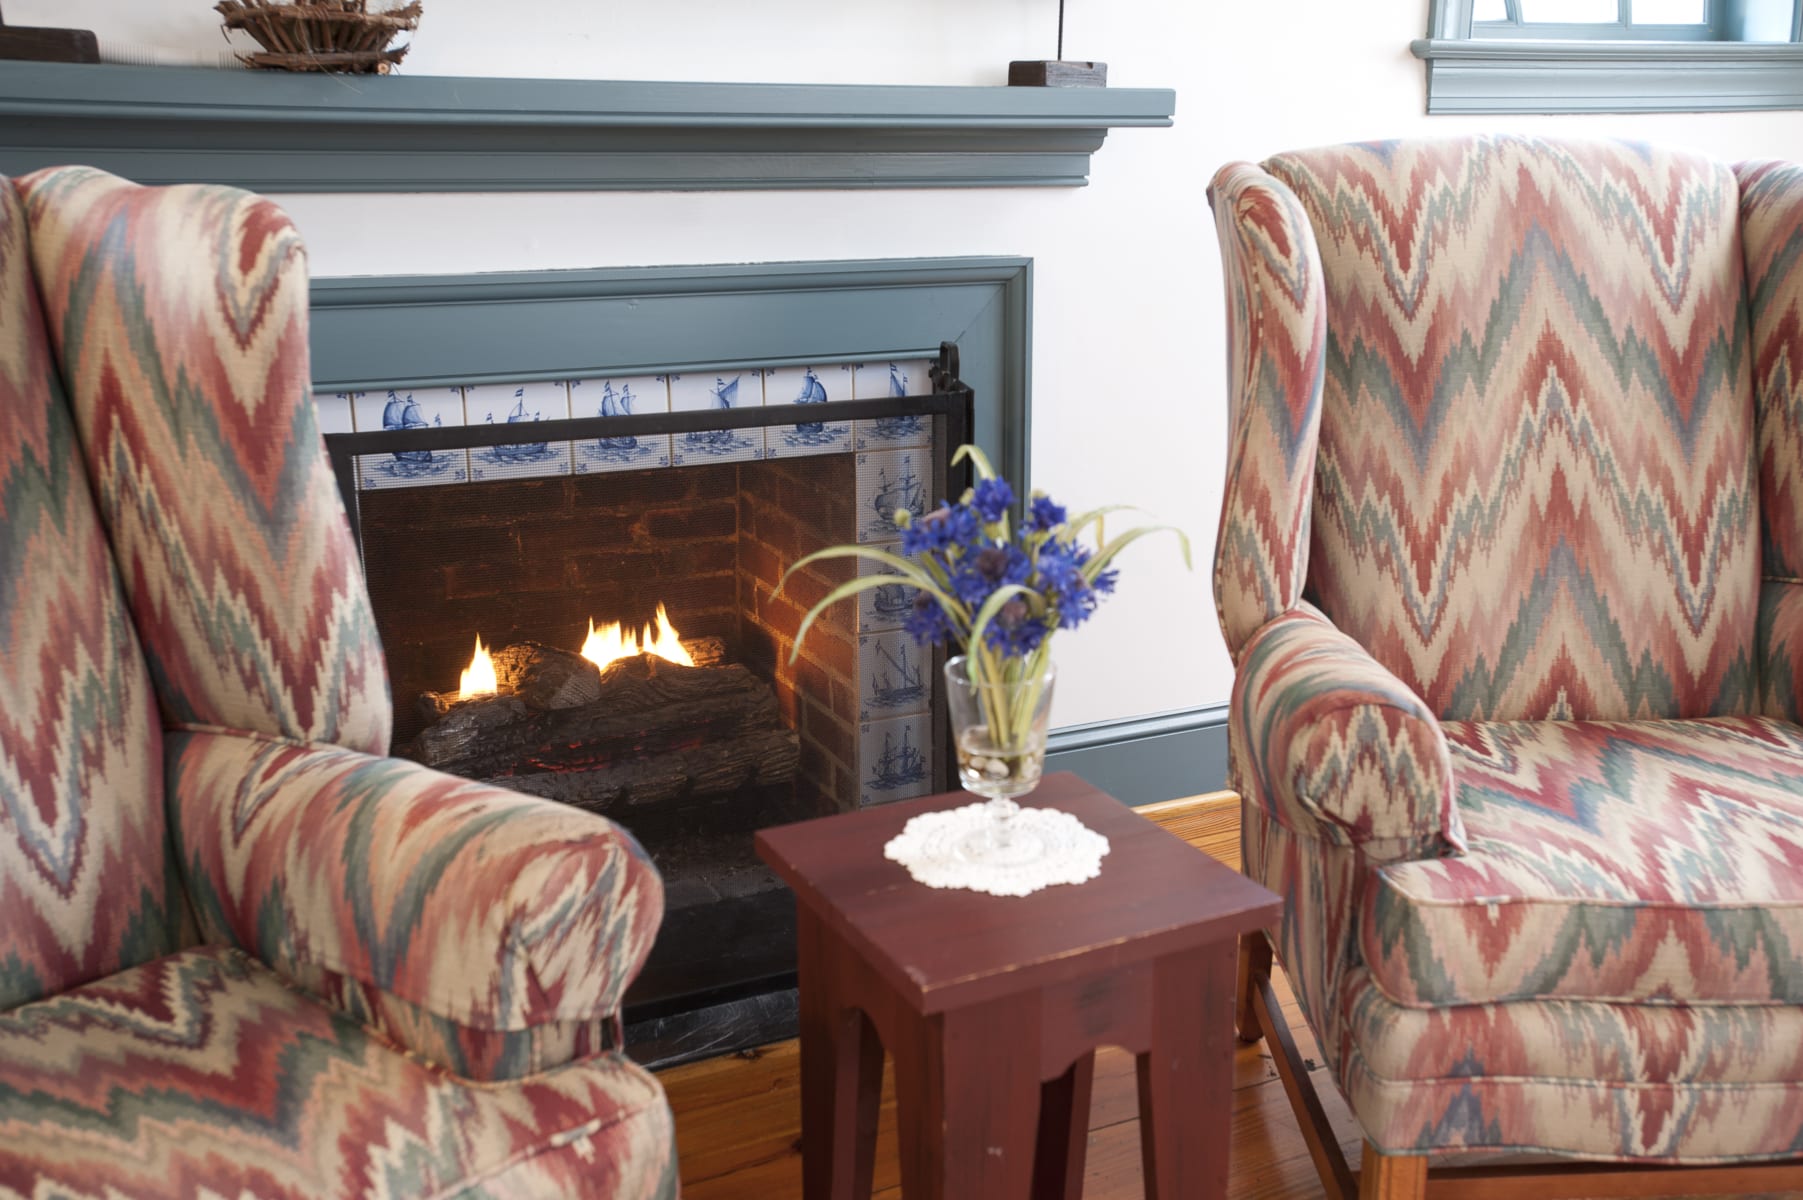 Arm chairs near fireplace.